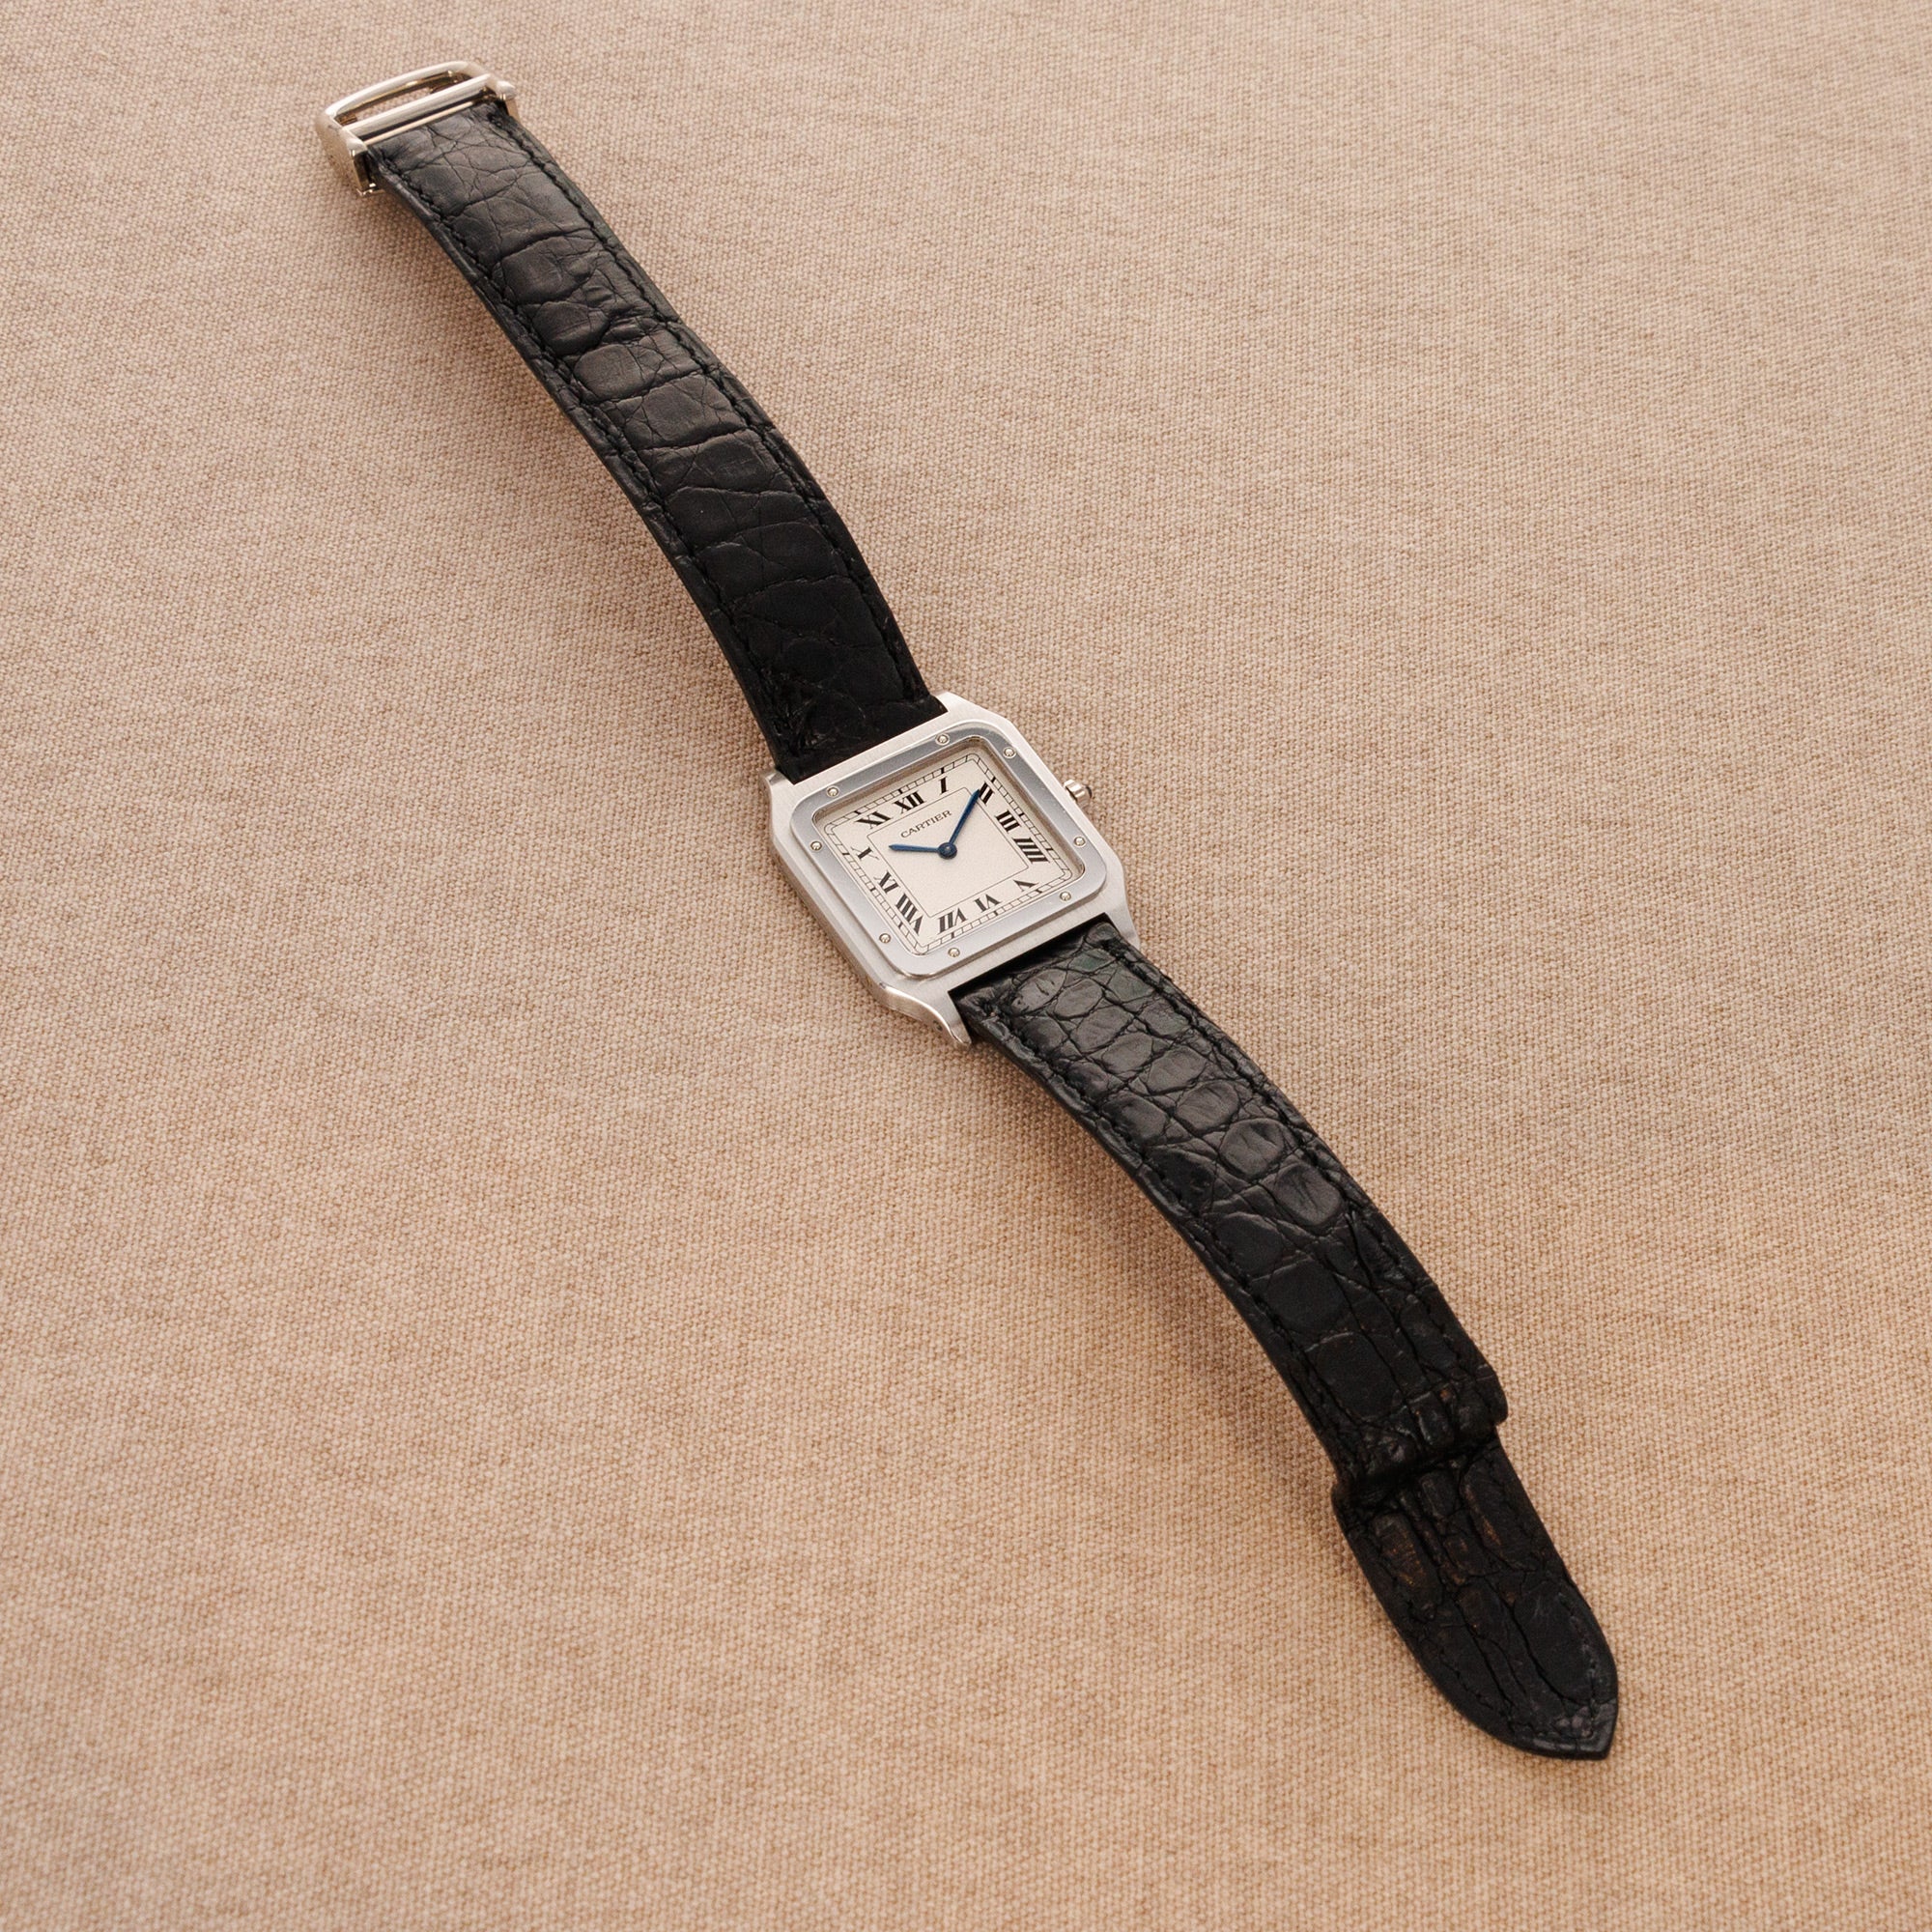 Cartier - Cartier Platinum Santos Mecanique Watch Ref. 1575 - The Keystone Watches